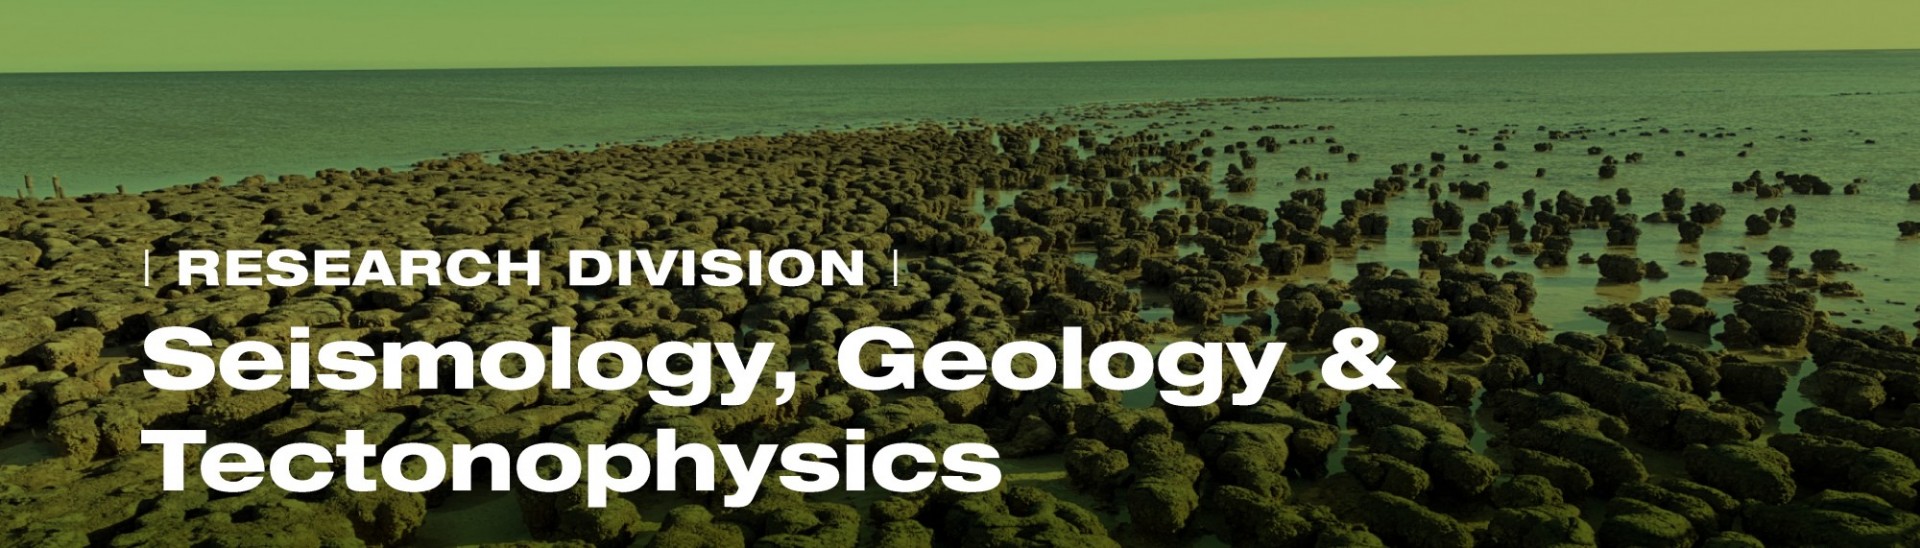 Seismology, Geology & Tectonophysics Division